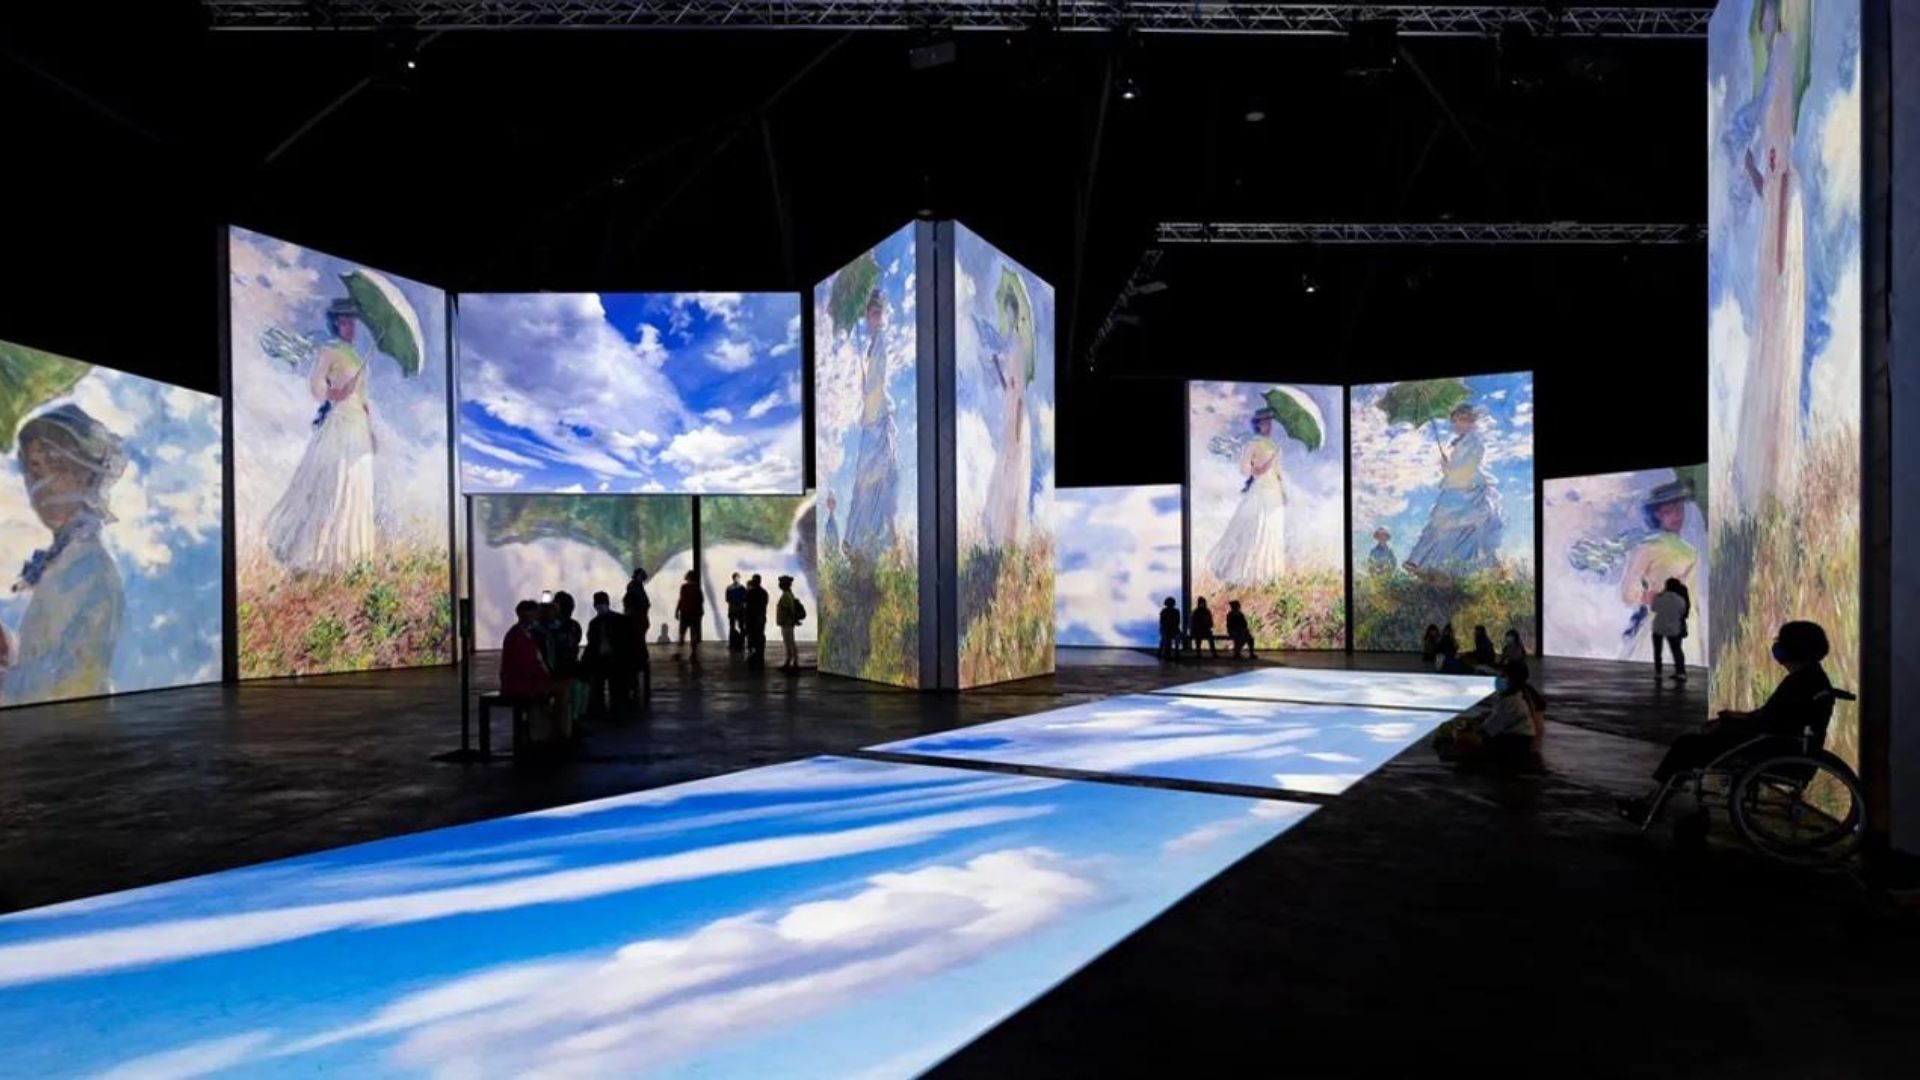 Monet, Van Gogh Immersive Exhibits Announce New Locations